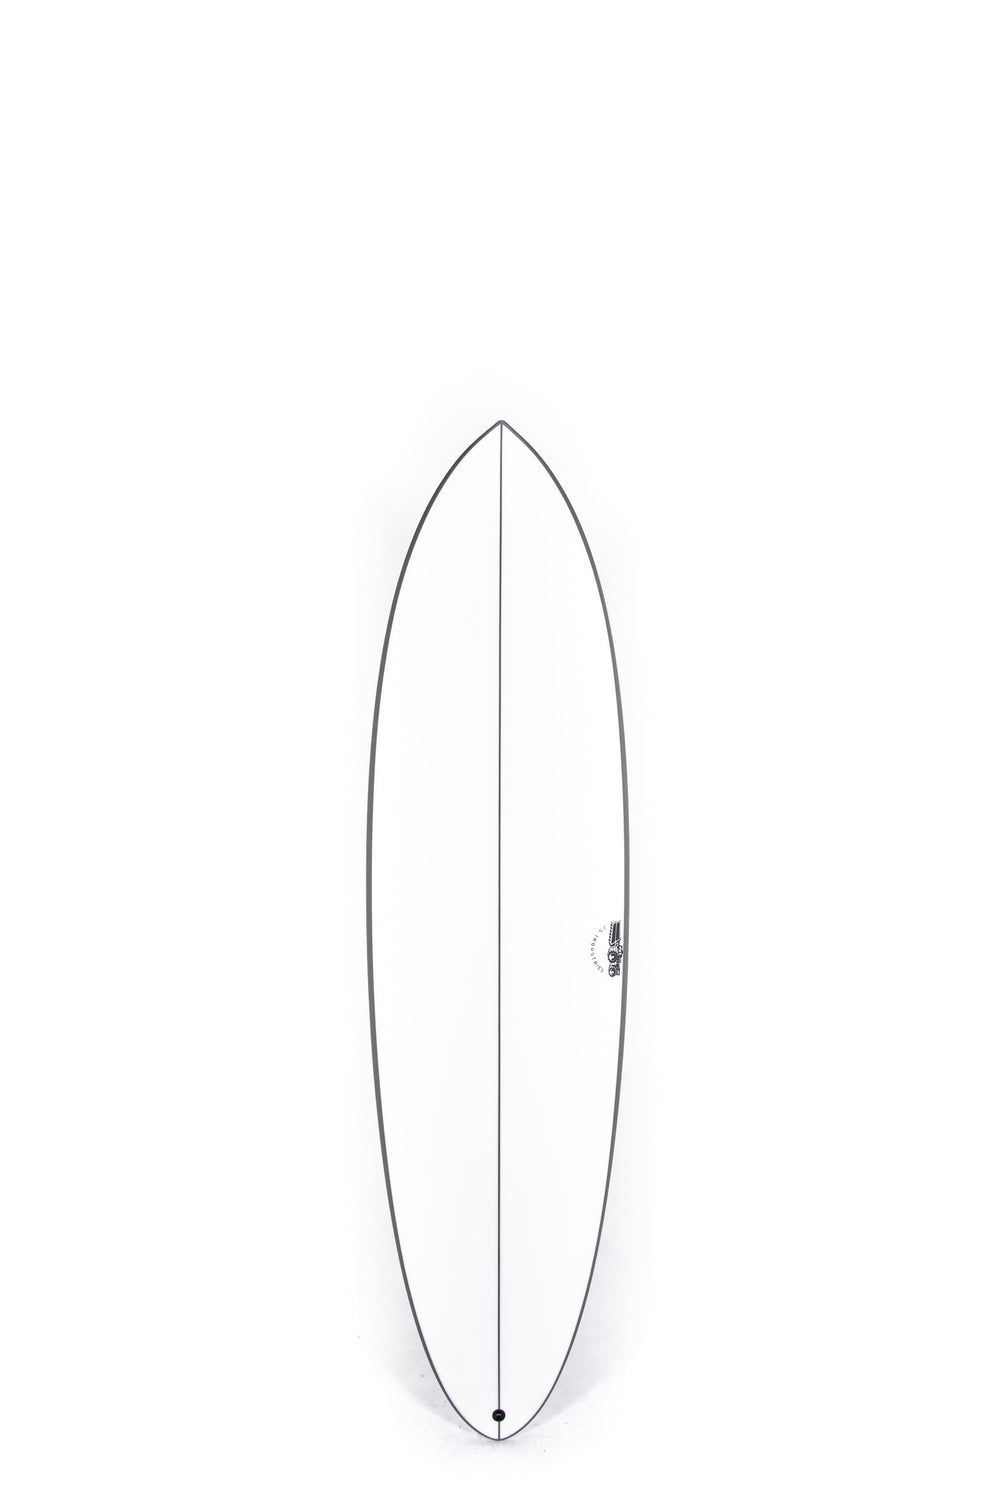 Pukas Surf Shop - JS Surfboards - EL BARON - 6'6